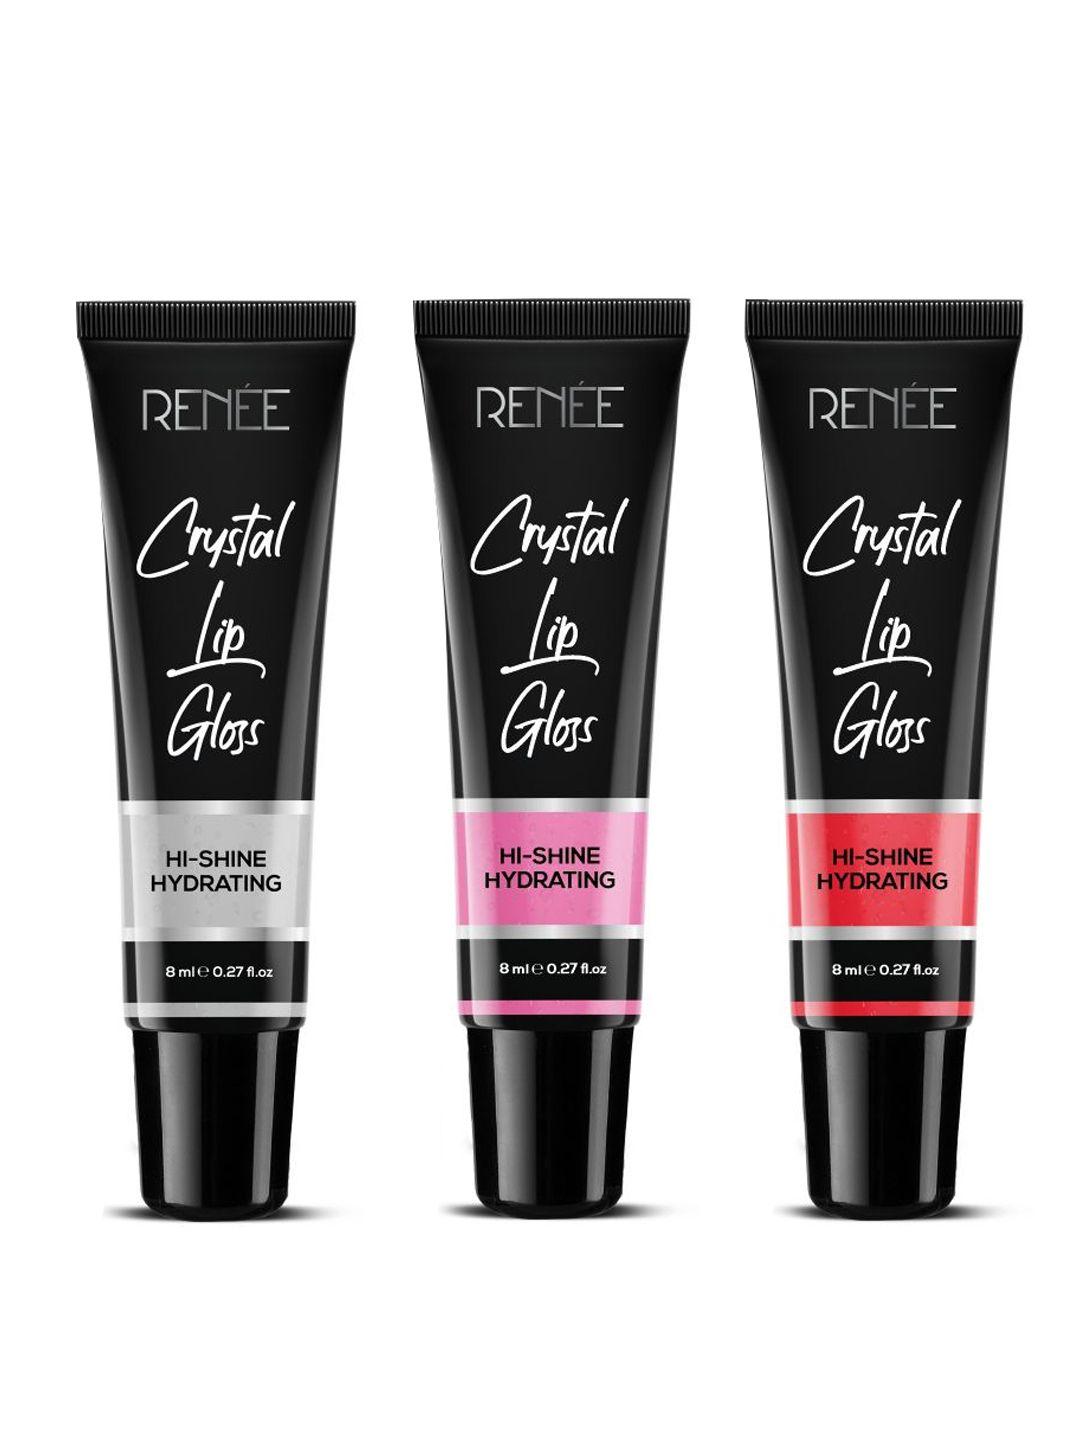 renee crystal hi-shine glassy hydrating lip gloss trio - 8ml each